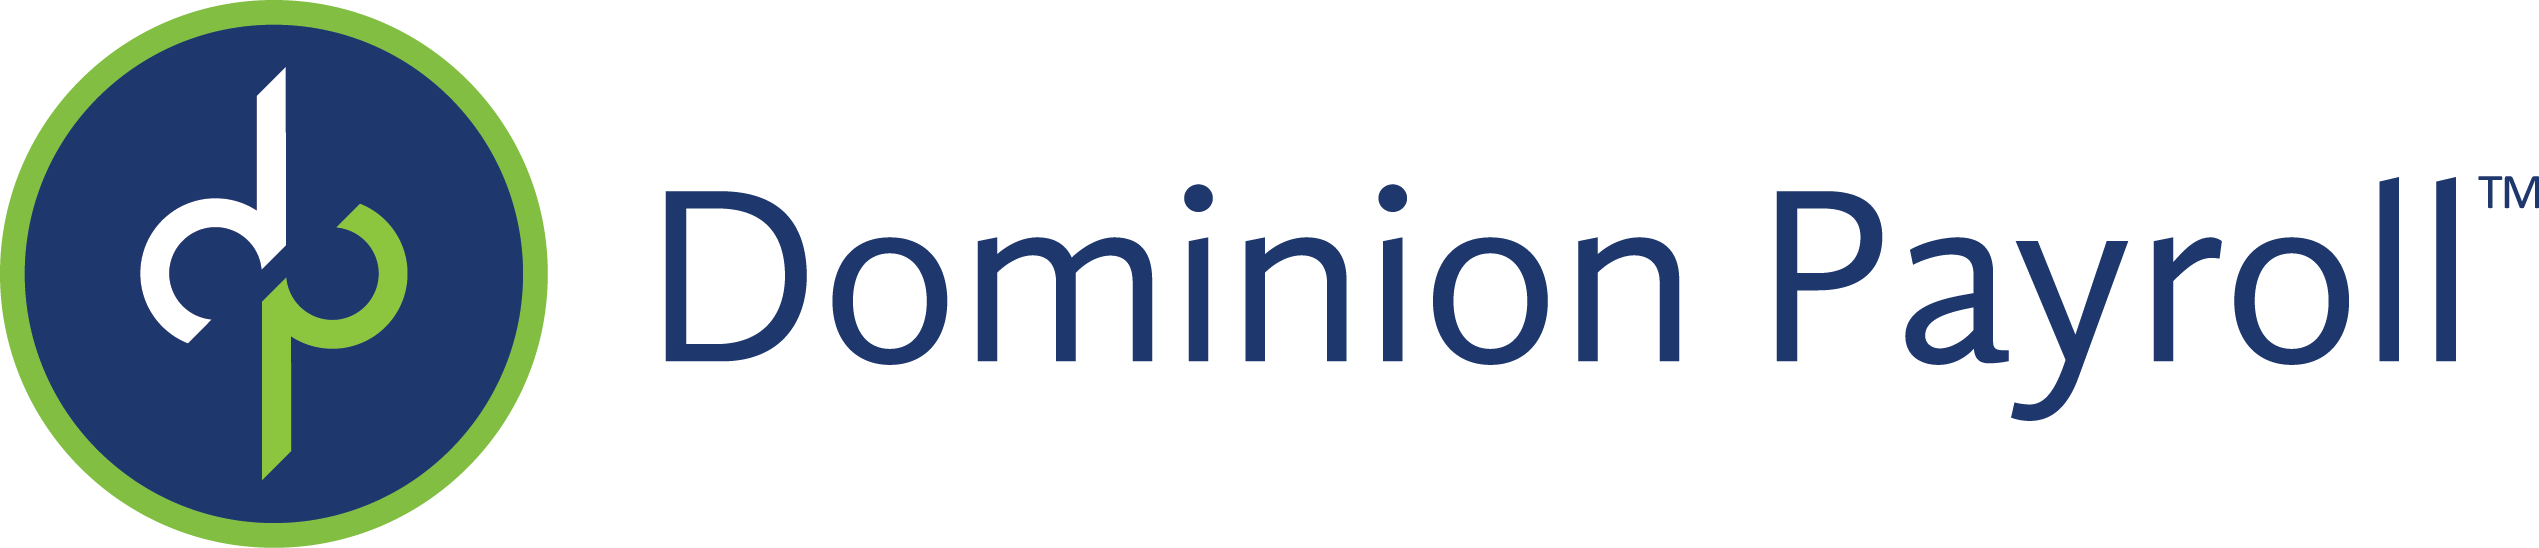 Dominion Payroll logo